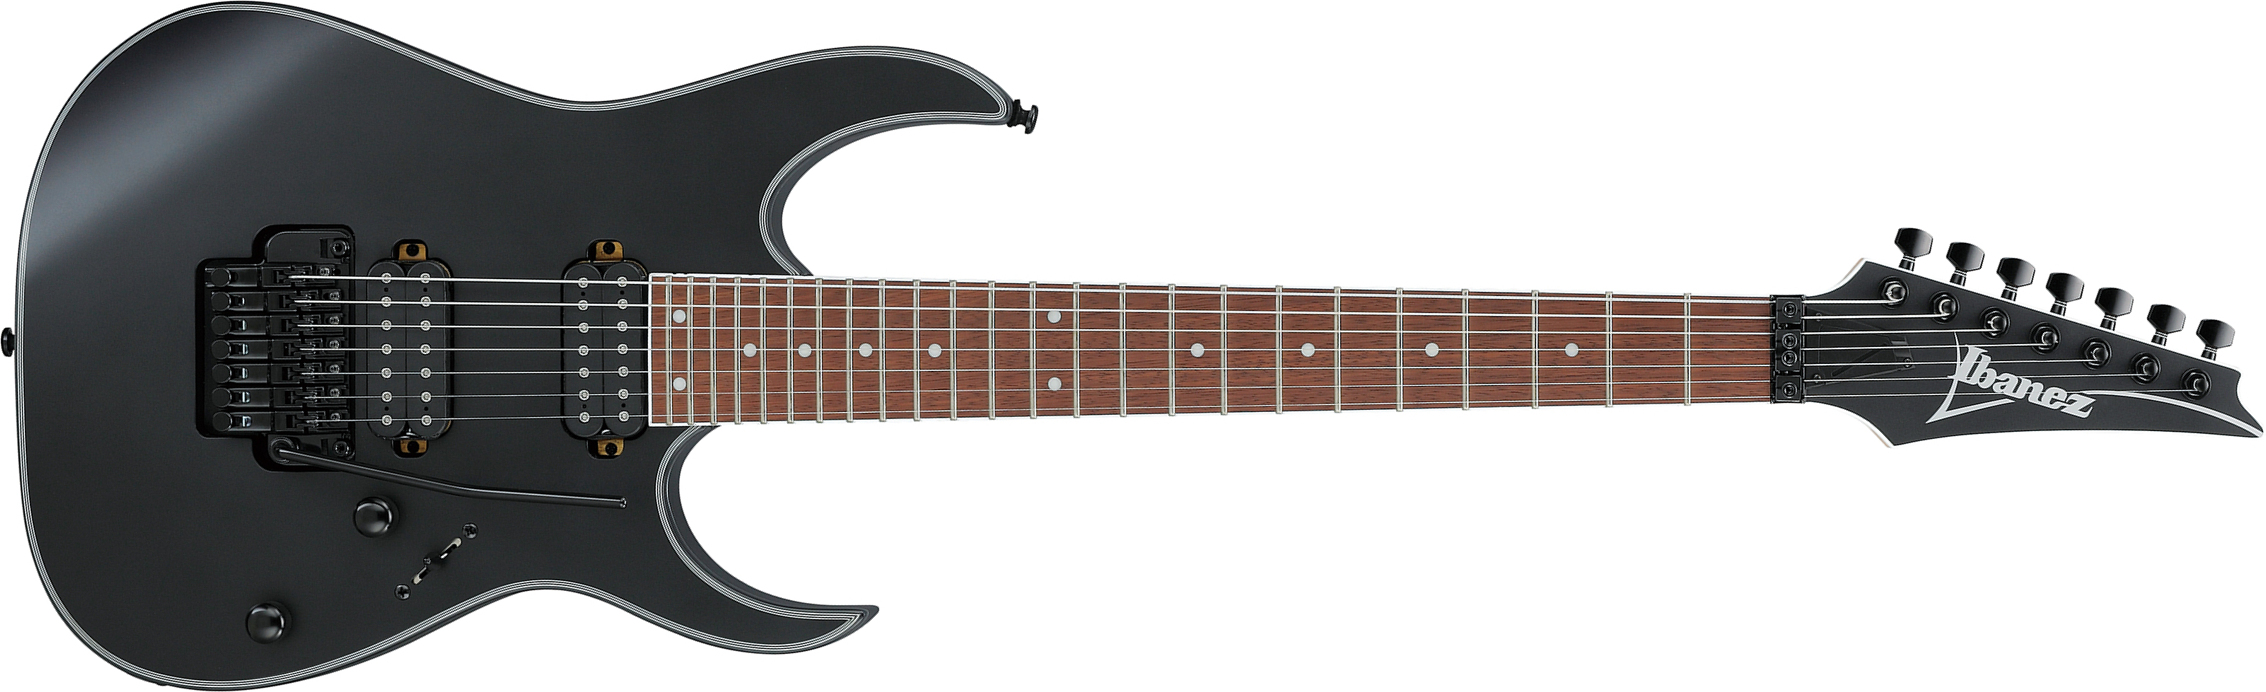 Ibanez Rg7320ex Bkf 7c 2h Fr Jat - Black Flat - 7-saitige E-Gitarre - Main picture